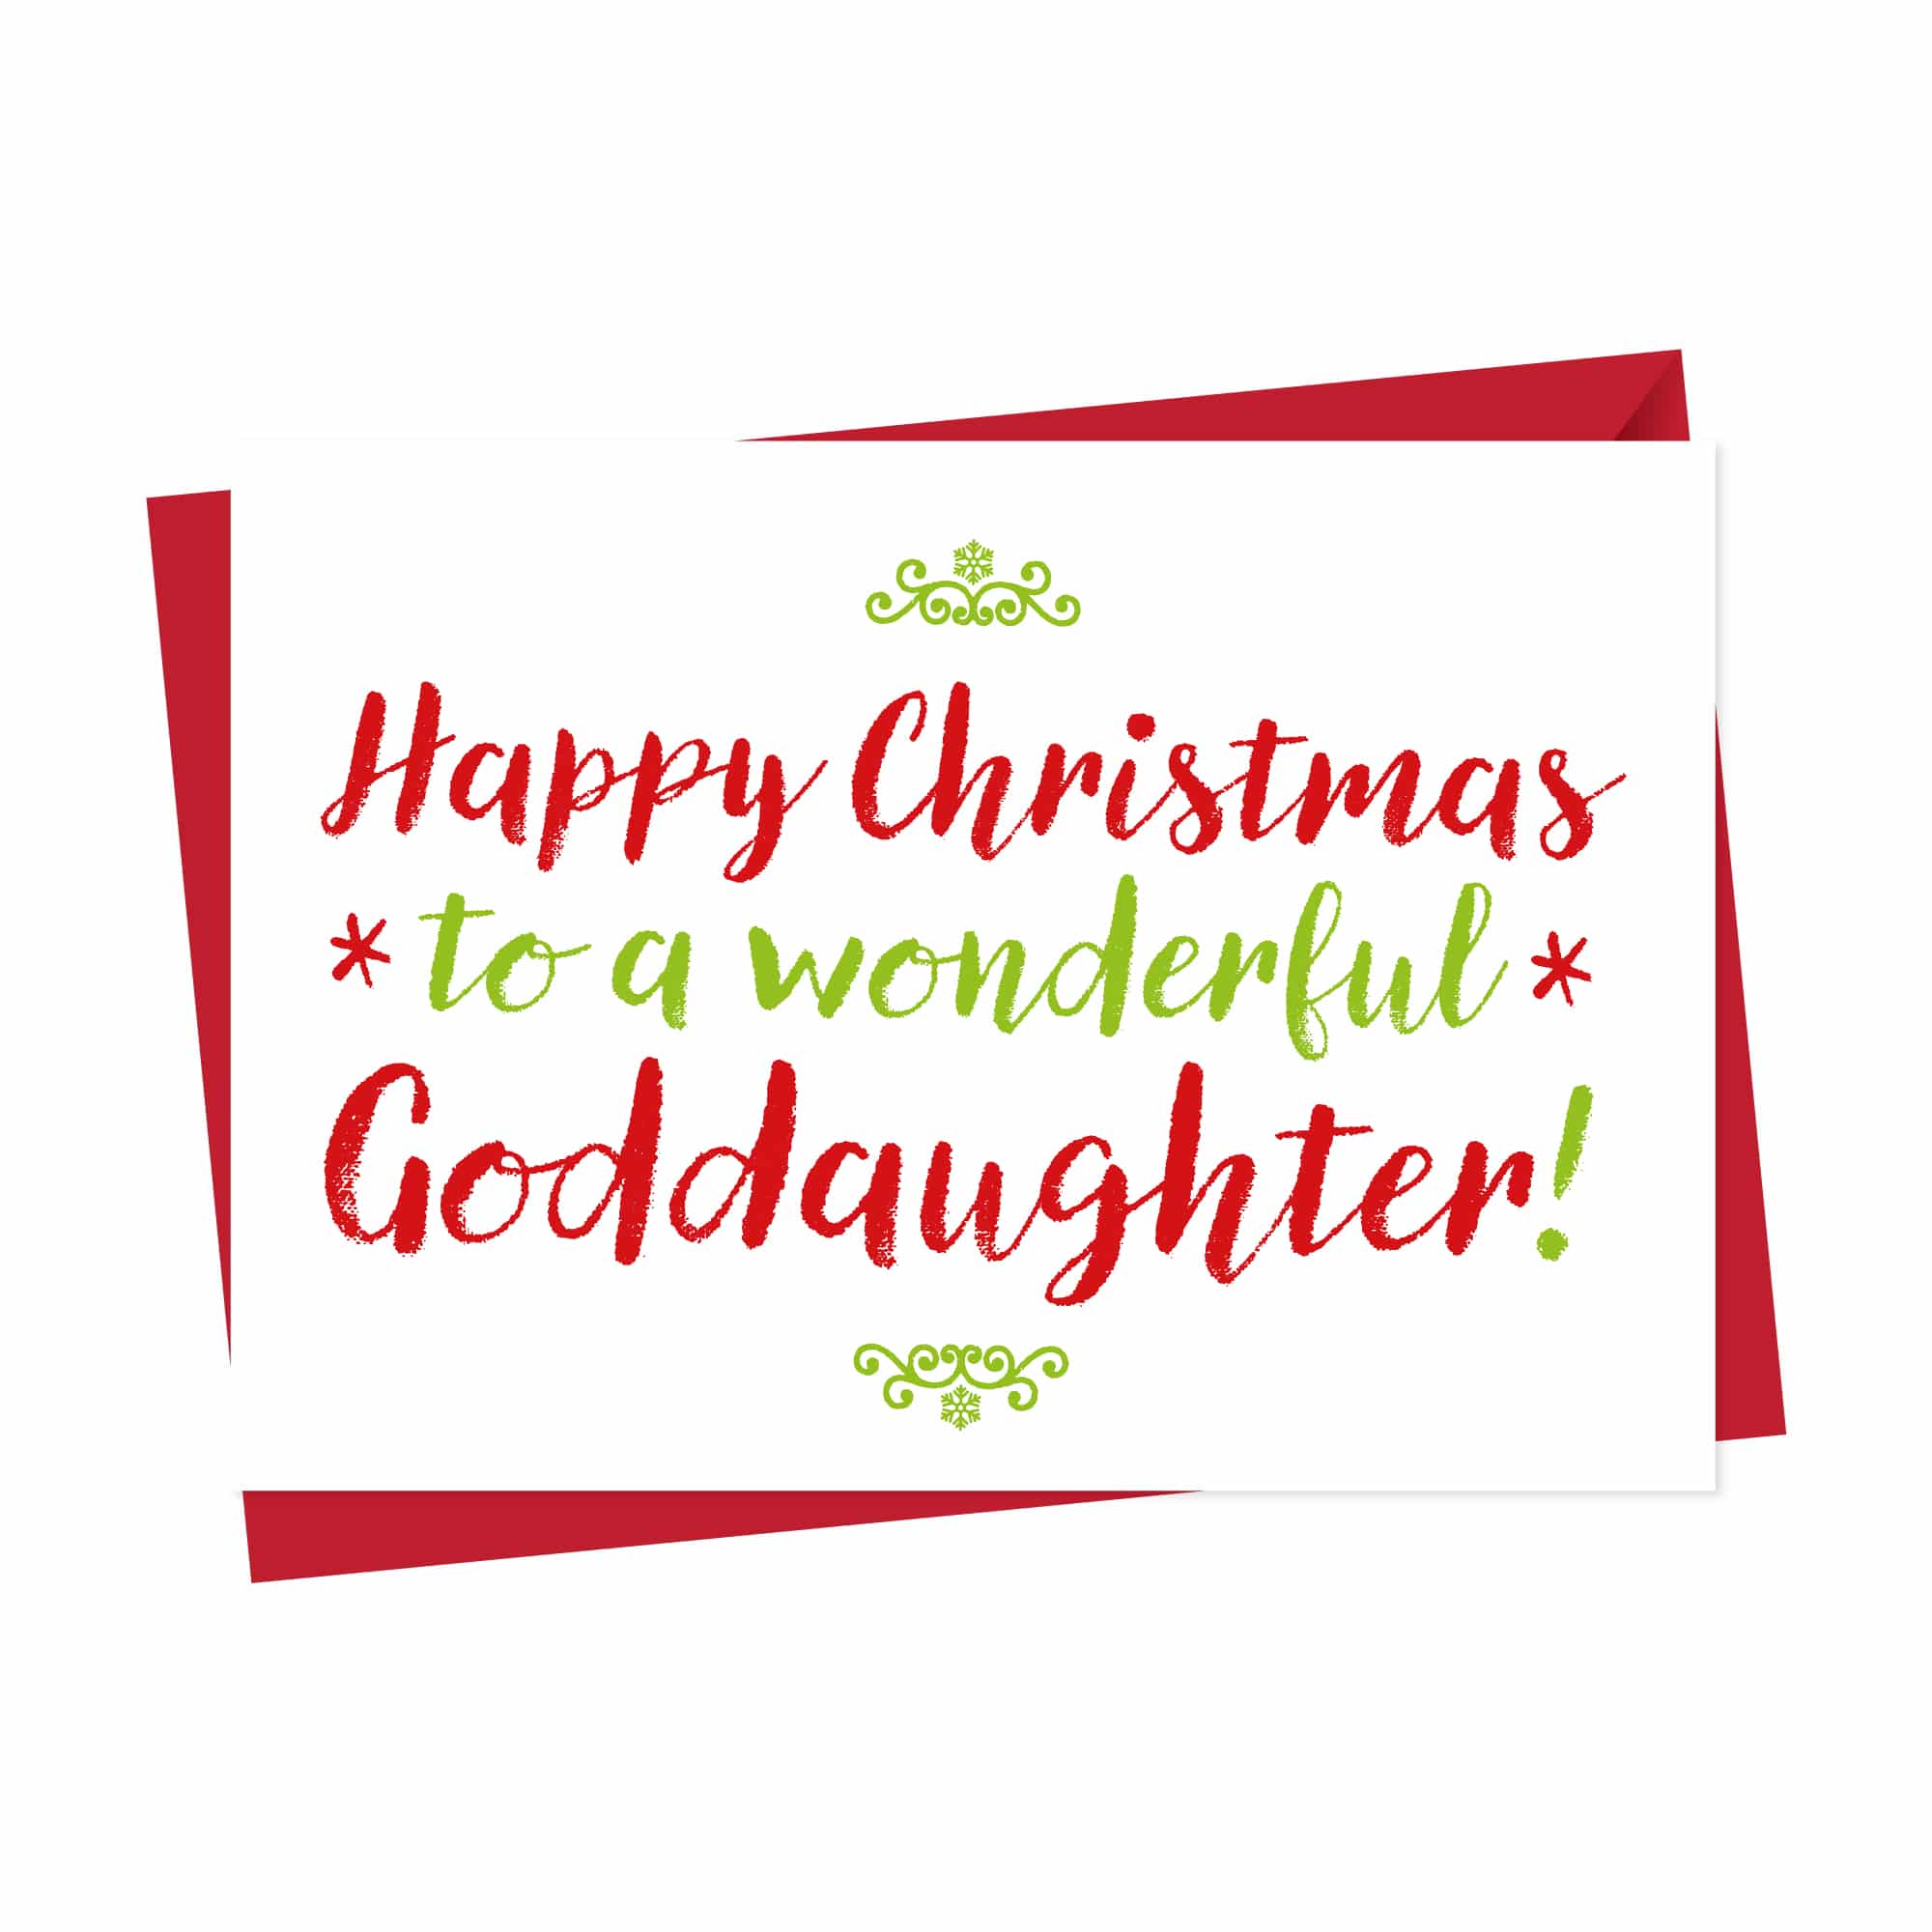 Christmas Card For Wonderful Goddaughter